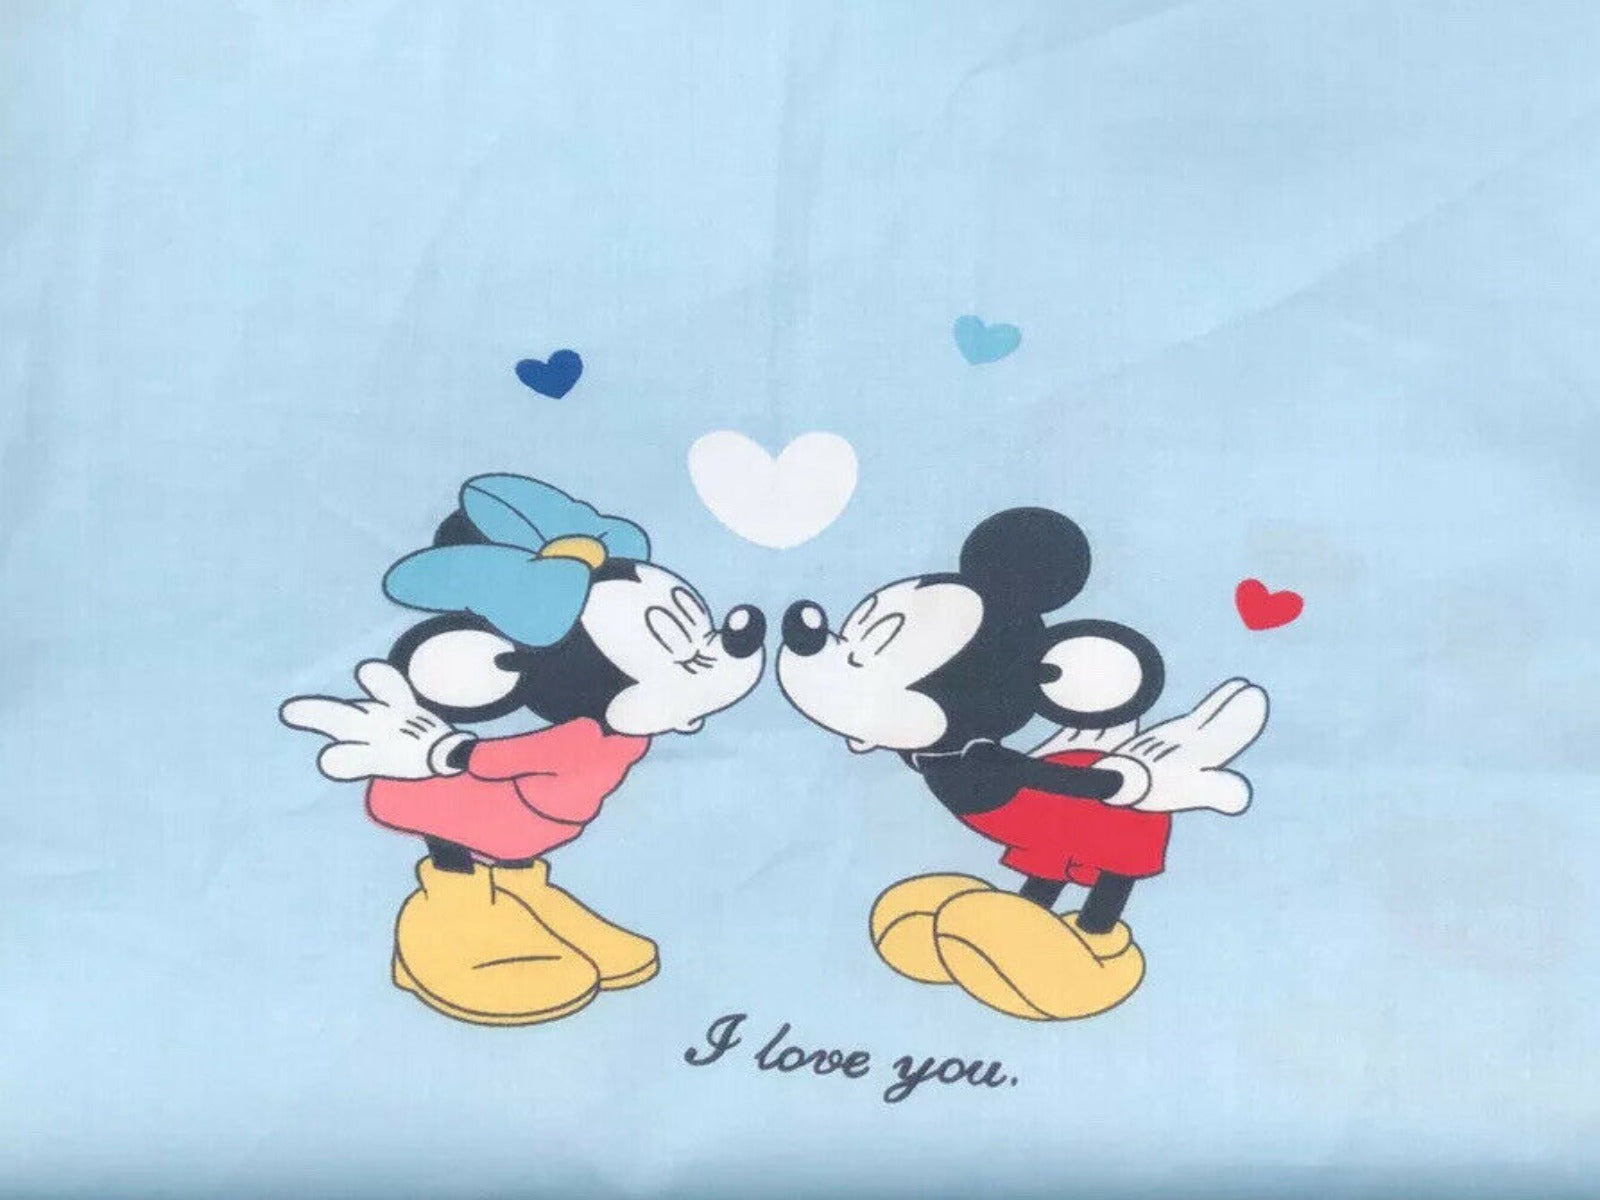 Disney Mickey and Minnie Romantic Cotton Fabric